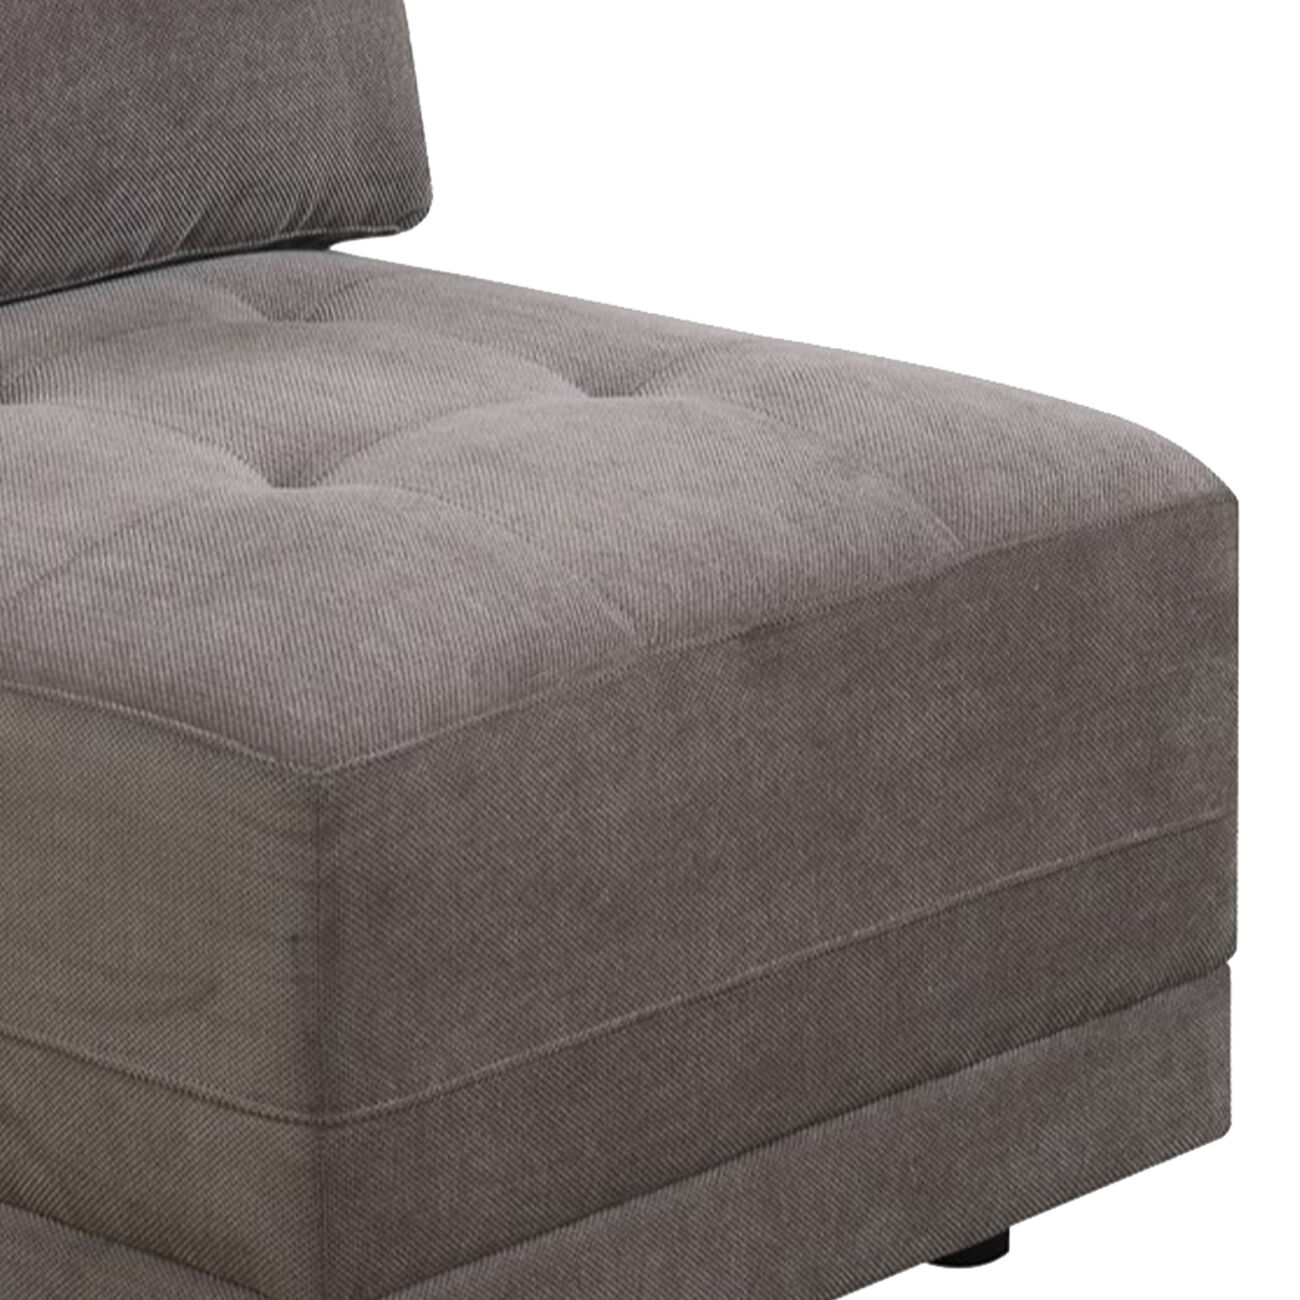 Armless Chair With Back Cushion, Gray